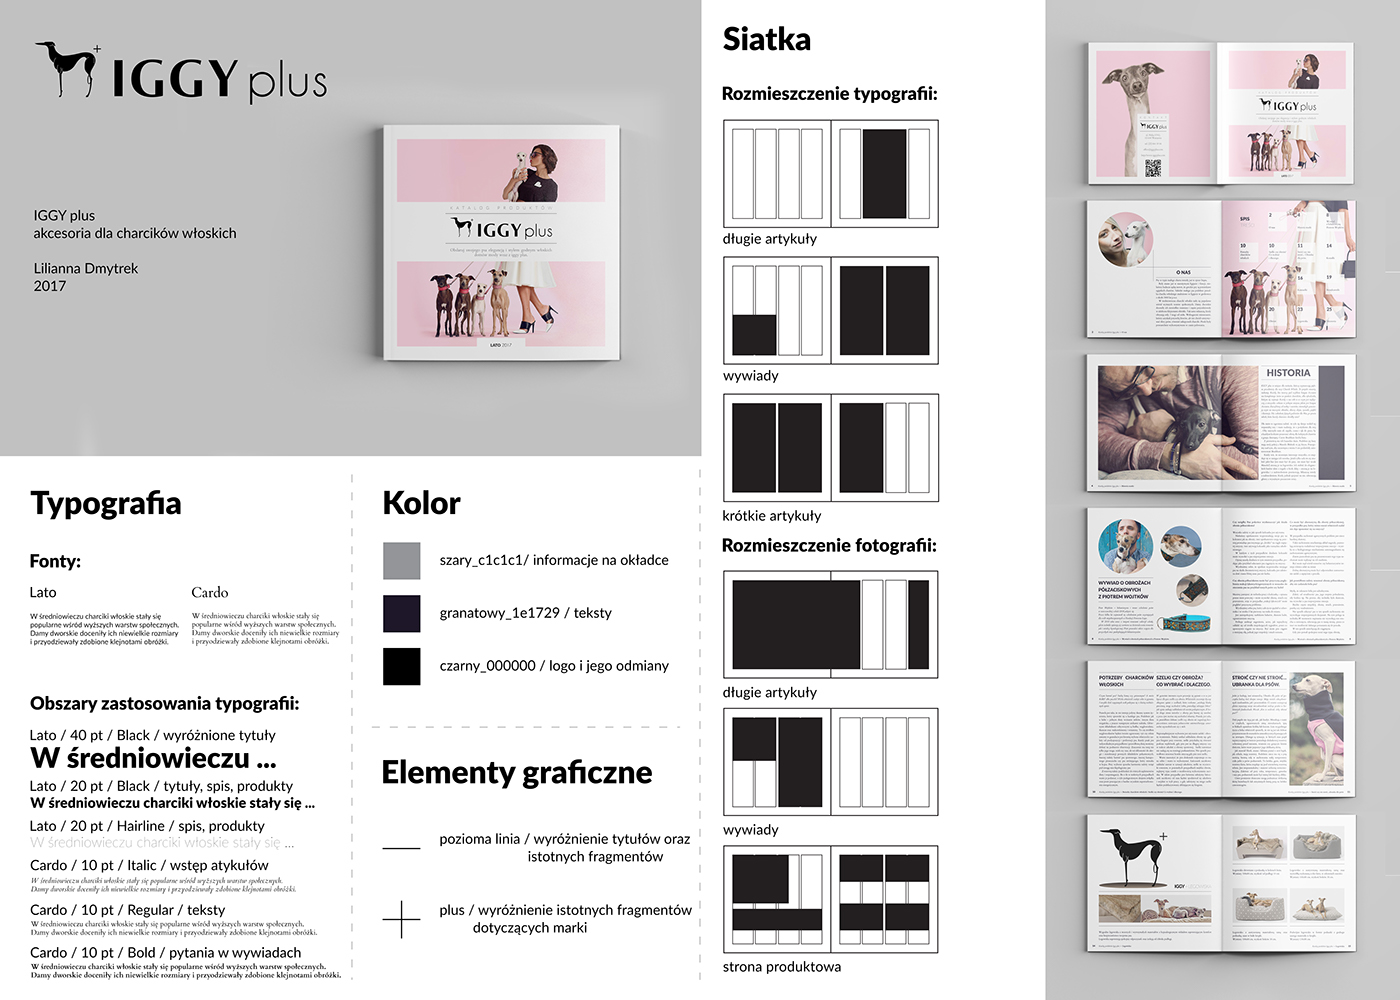 sighthound greyhound clothes catalog design typography   study dog